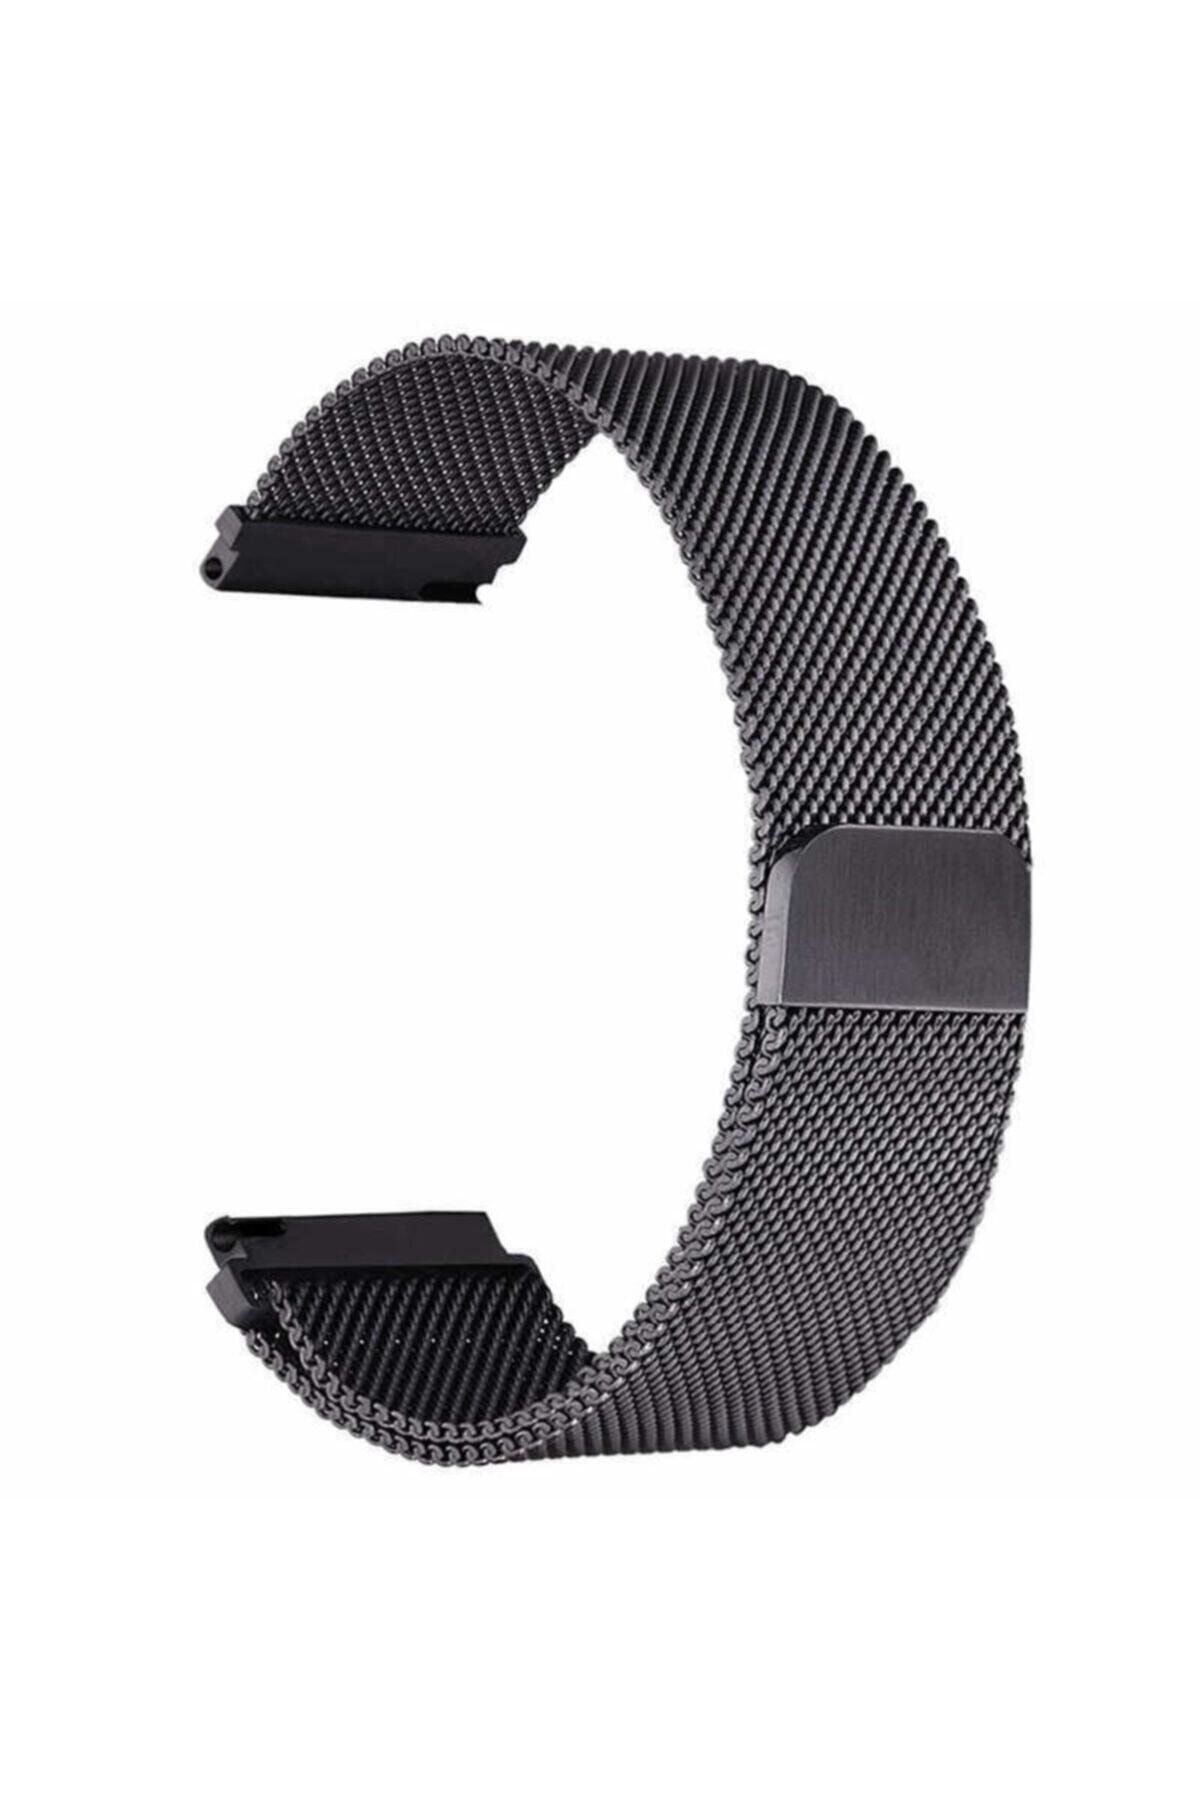 Fibaks Samsung Galaxy Watch 46mm (22mm) Krd-12 Akıllı Saat Kordonu Metal Örgü Hasır Kayış Bileklik